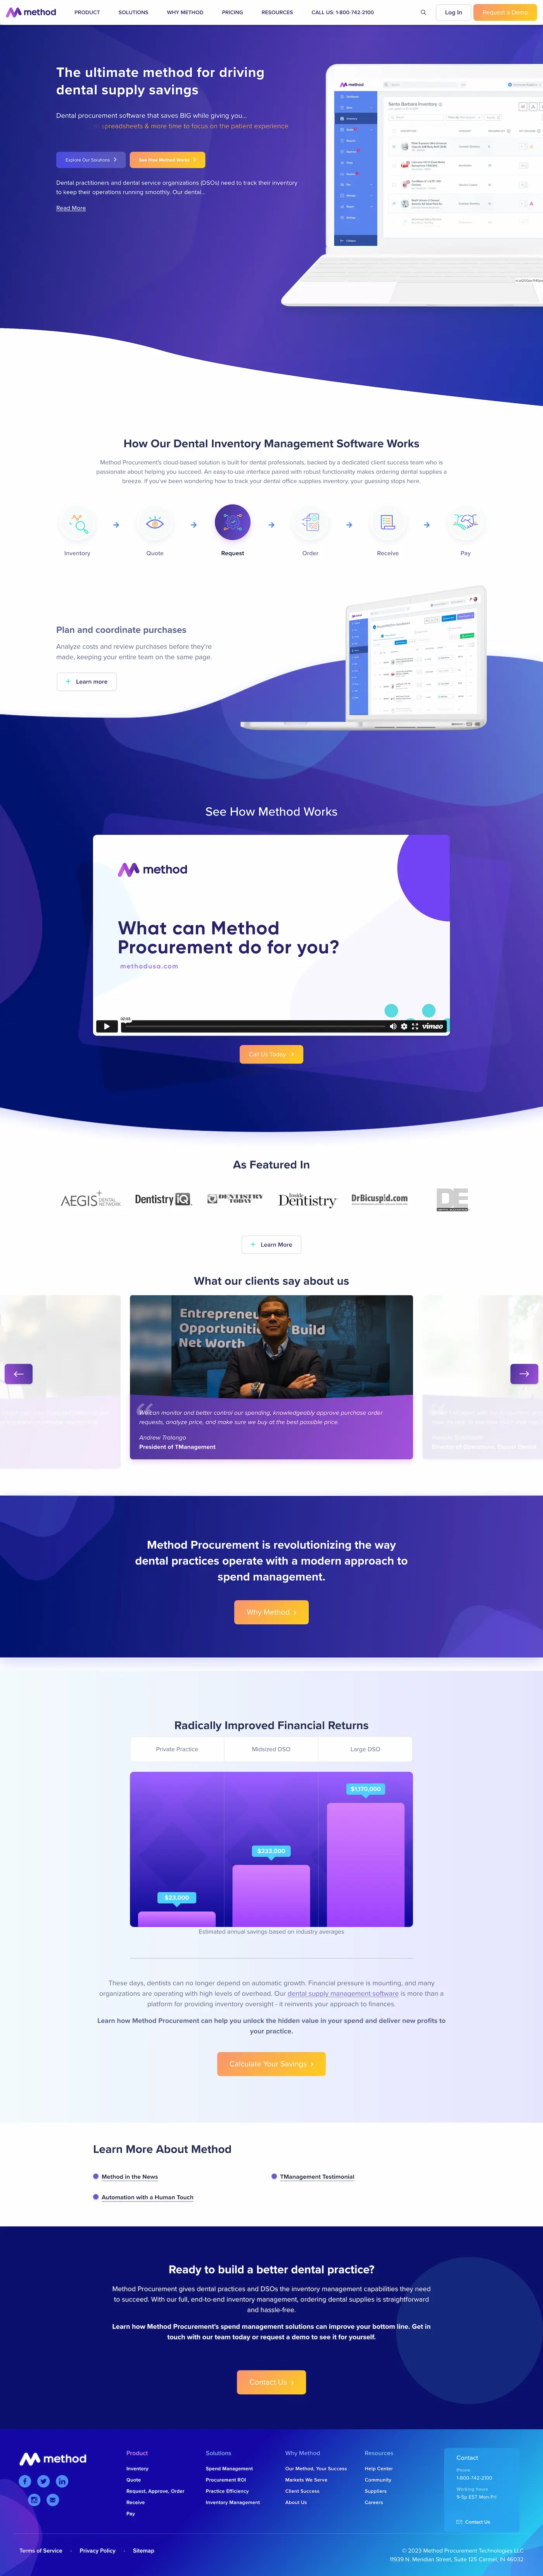 Method Procurement Homepage